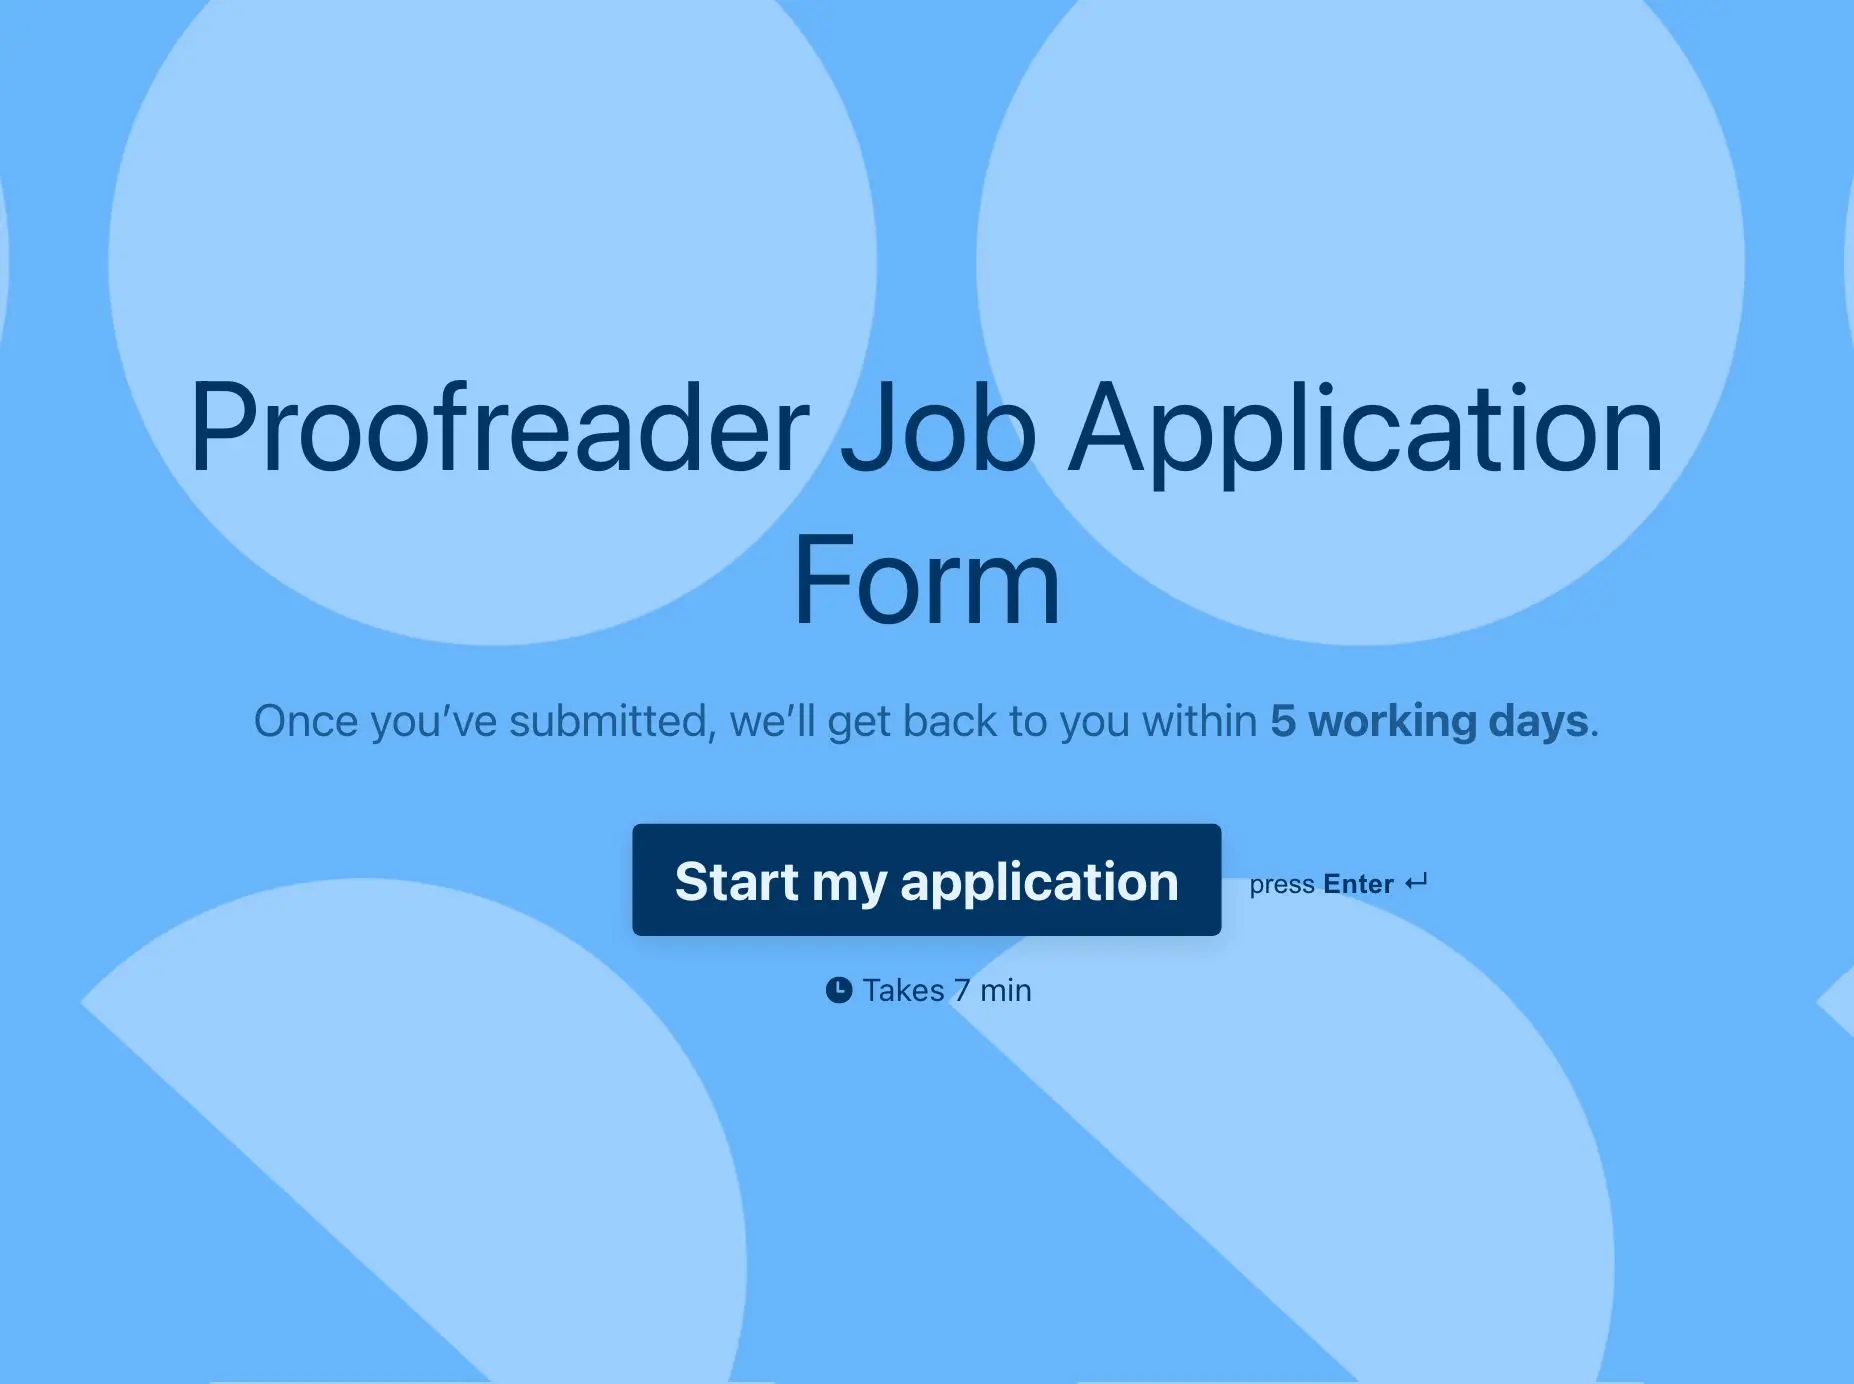 Proofreader Job Application Form Template Hero